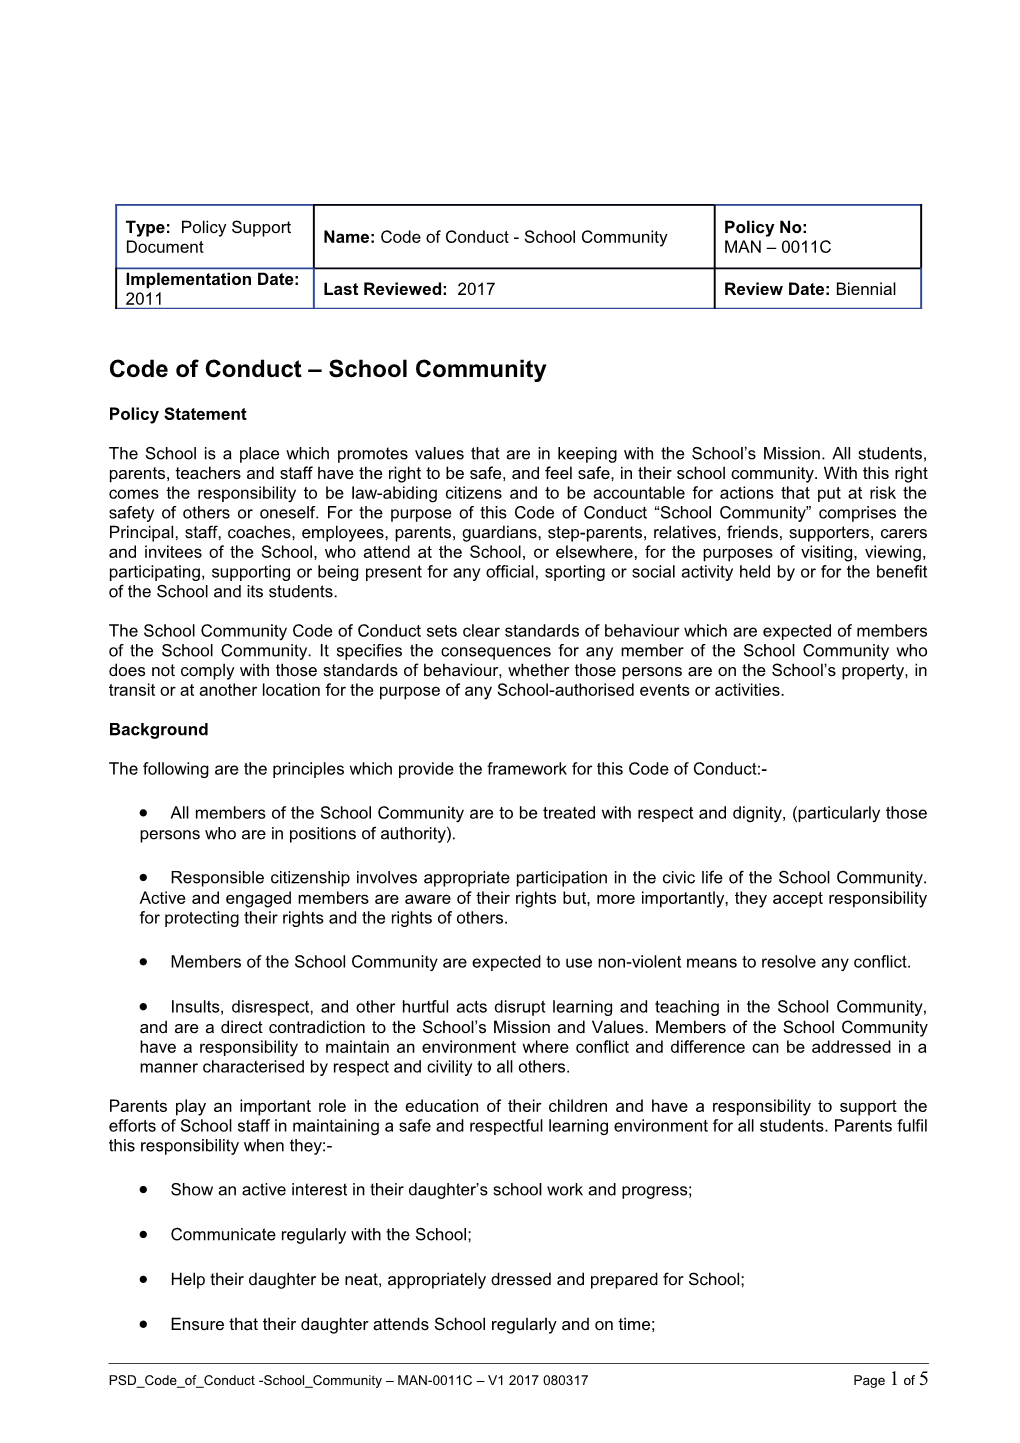 Code of Conduct School Community